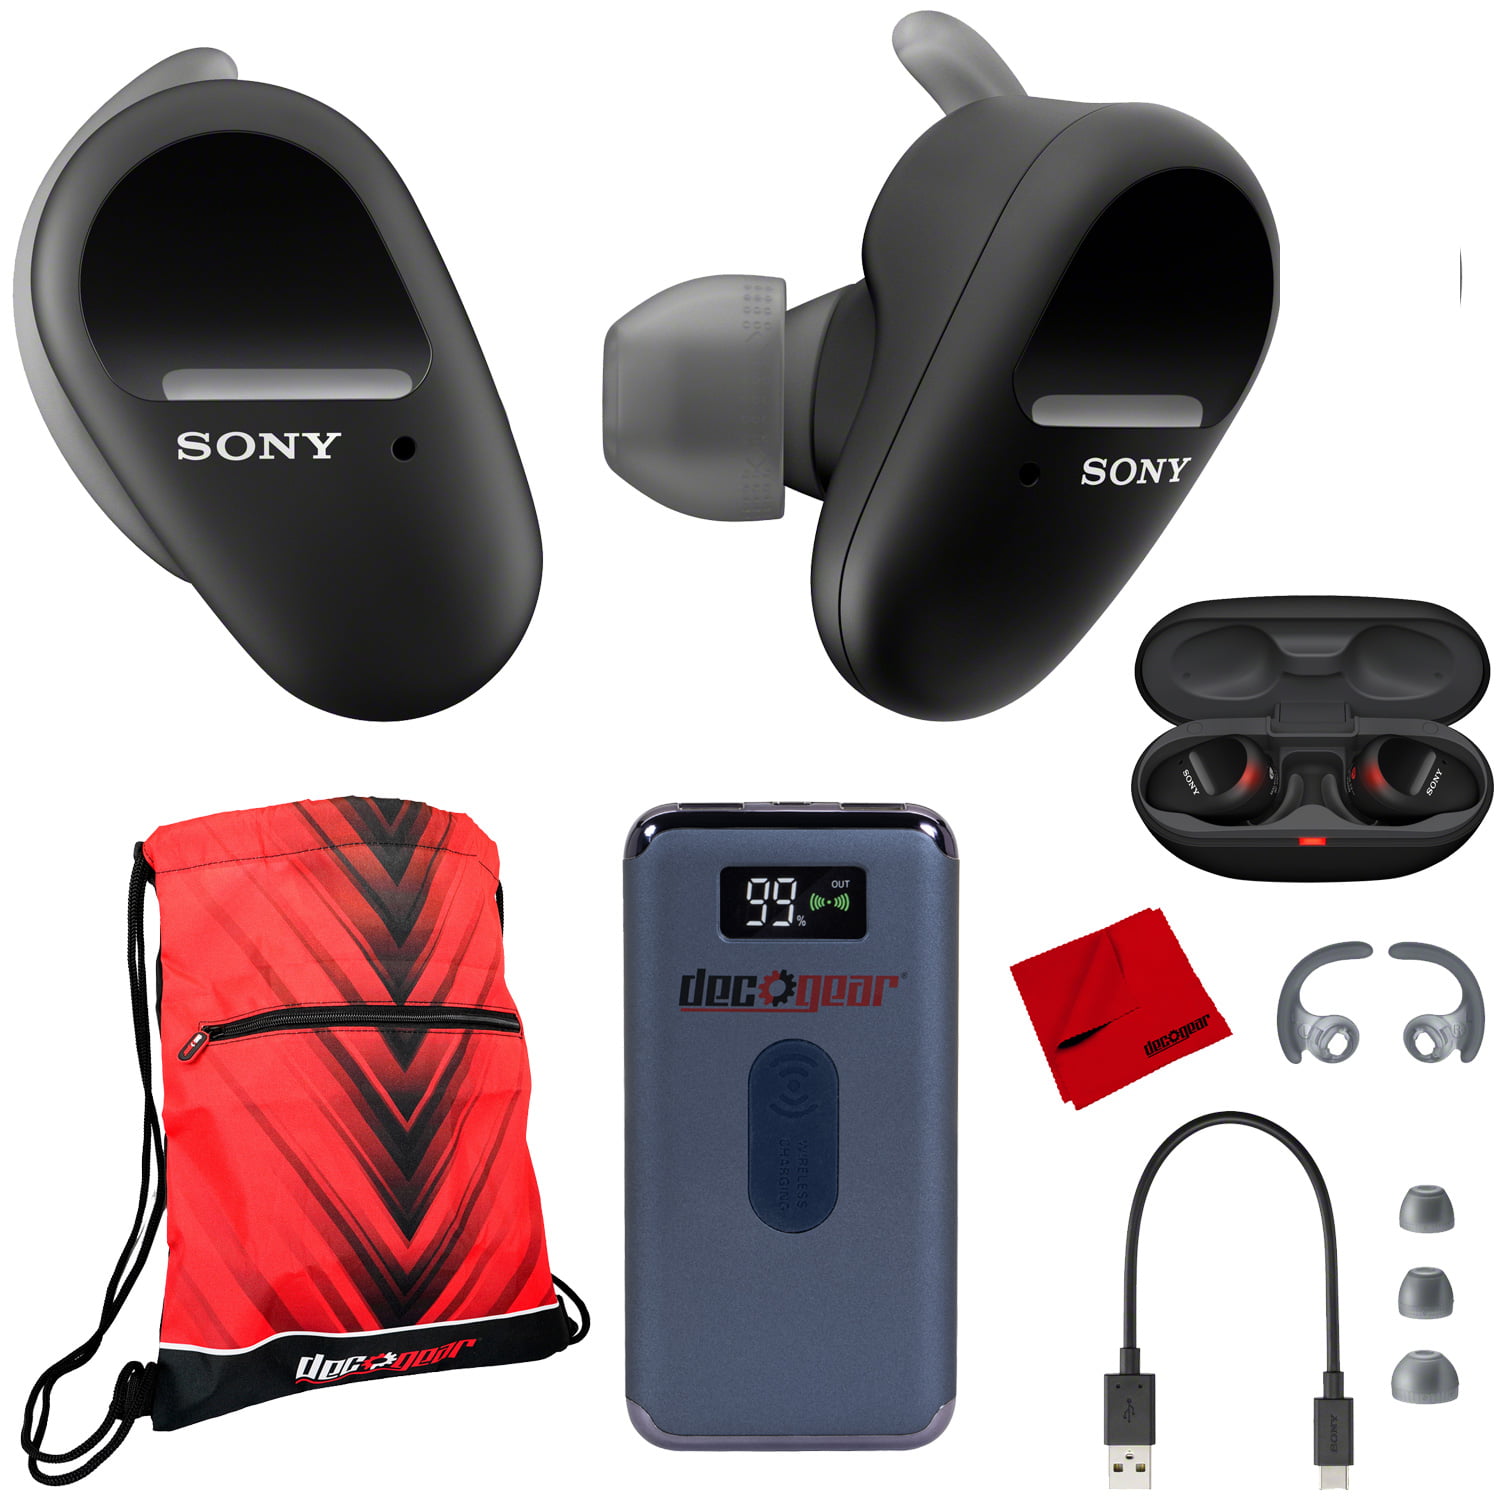 Sony WF-SP800N vs. WF-1000XM3: Which Sony ANC Earbuds Should You Buy?